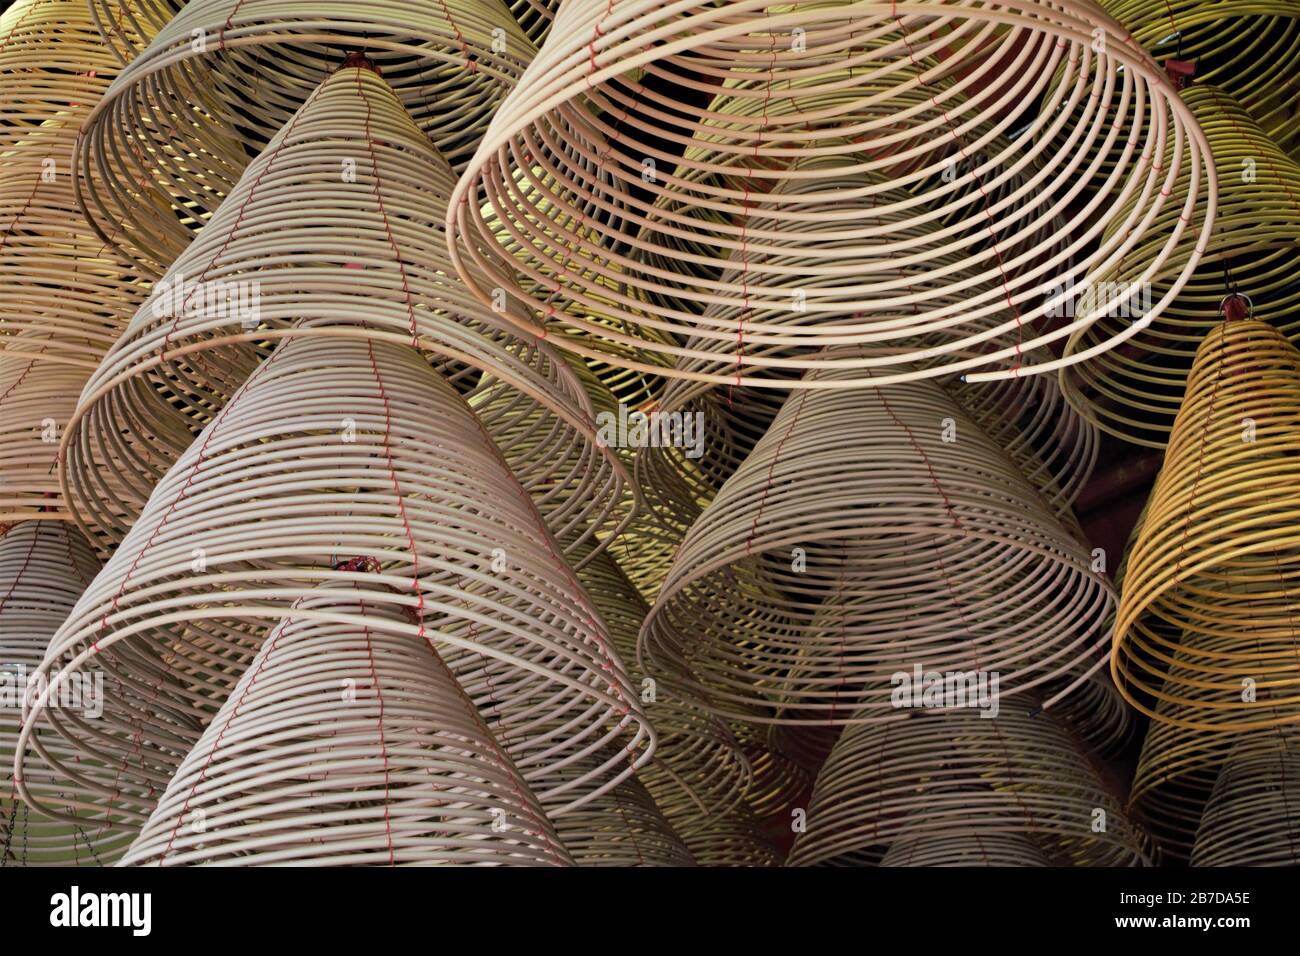 Incense coil, incense spiral at A-Ma Temple, Macau, China Stock Photo